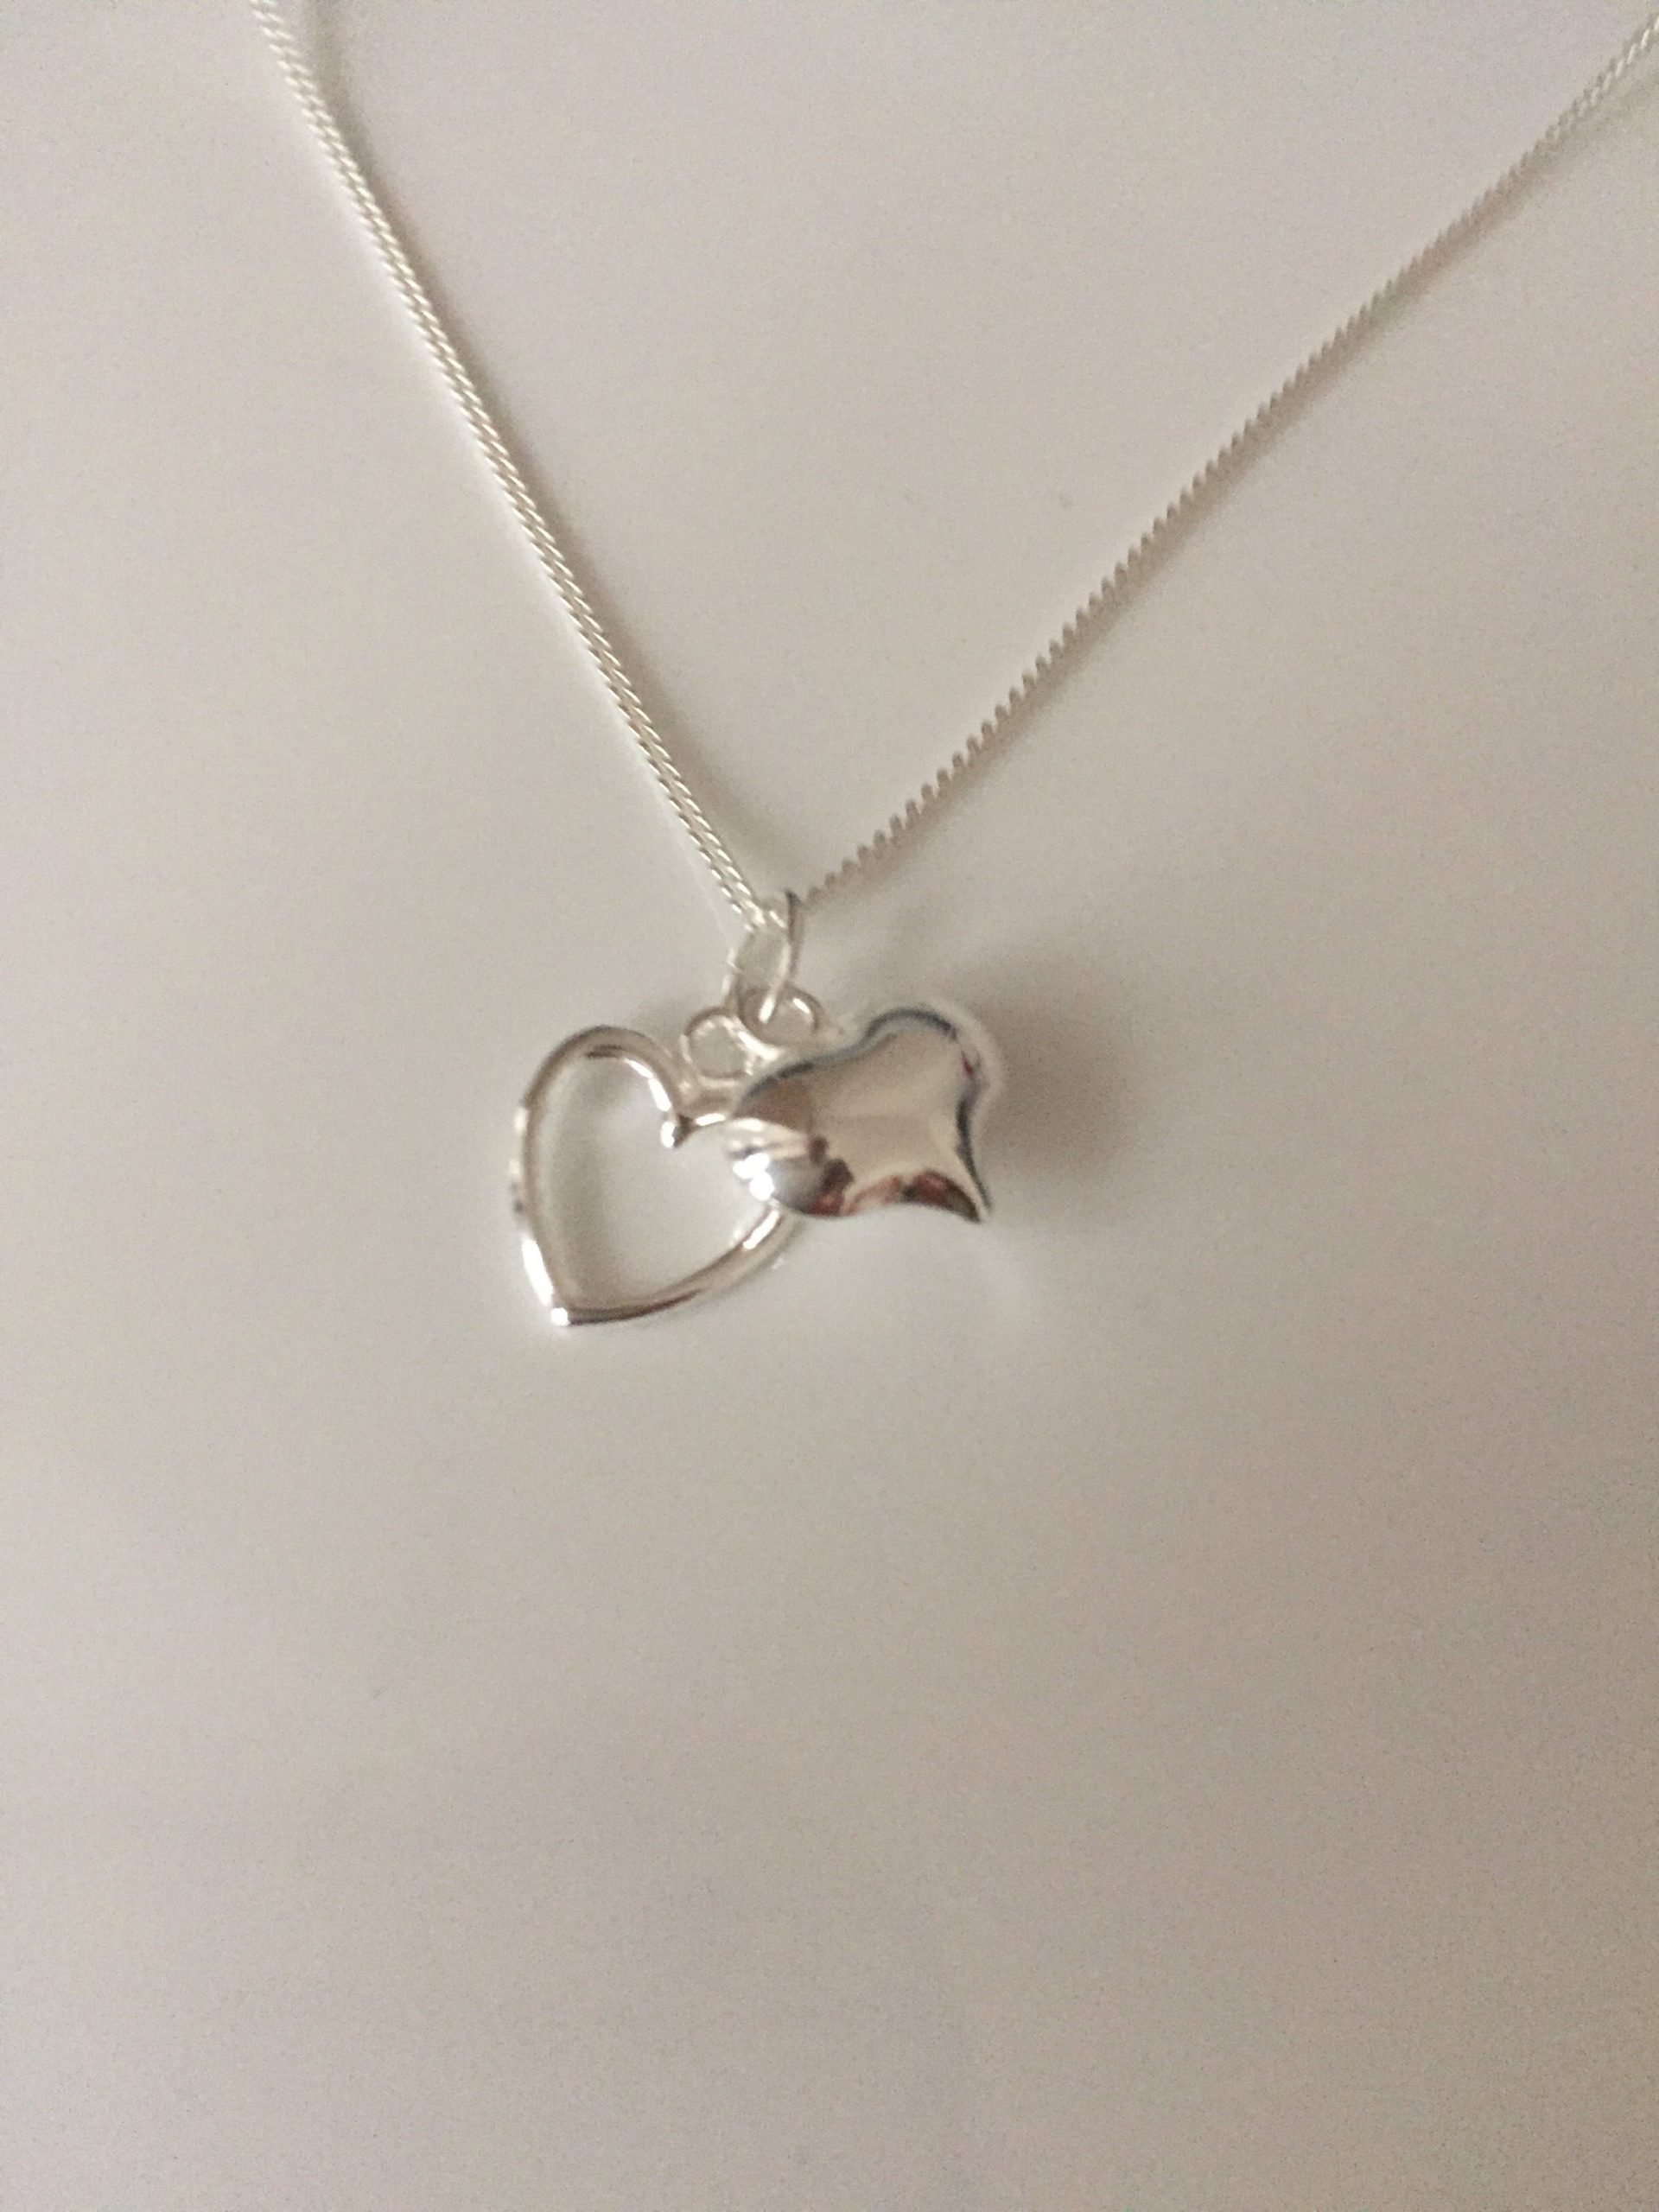 silver heart necklace 5e4571ea scaled